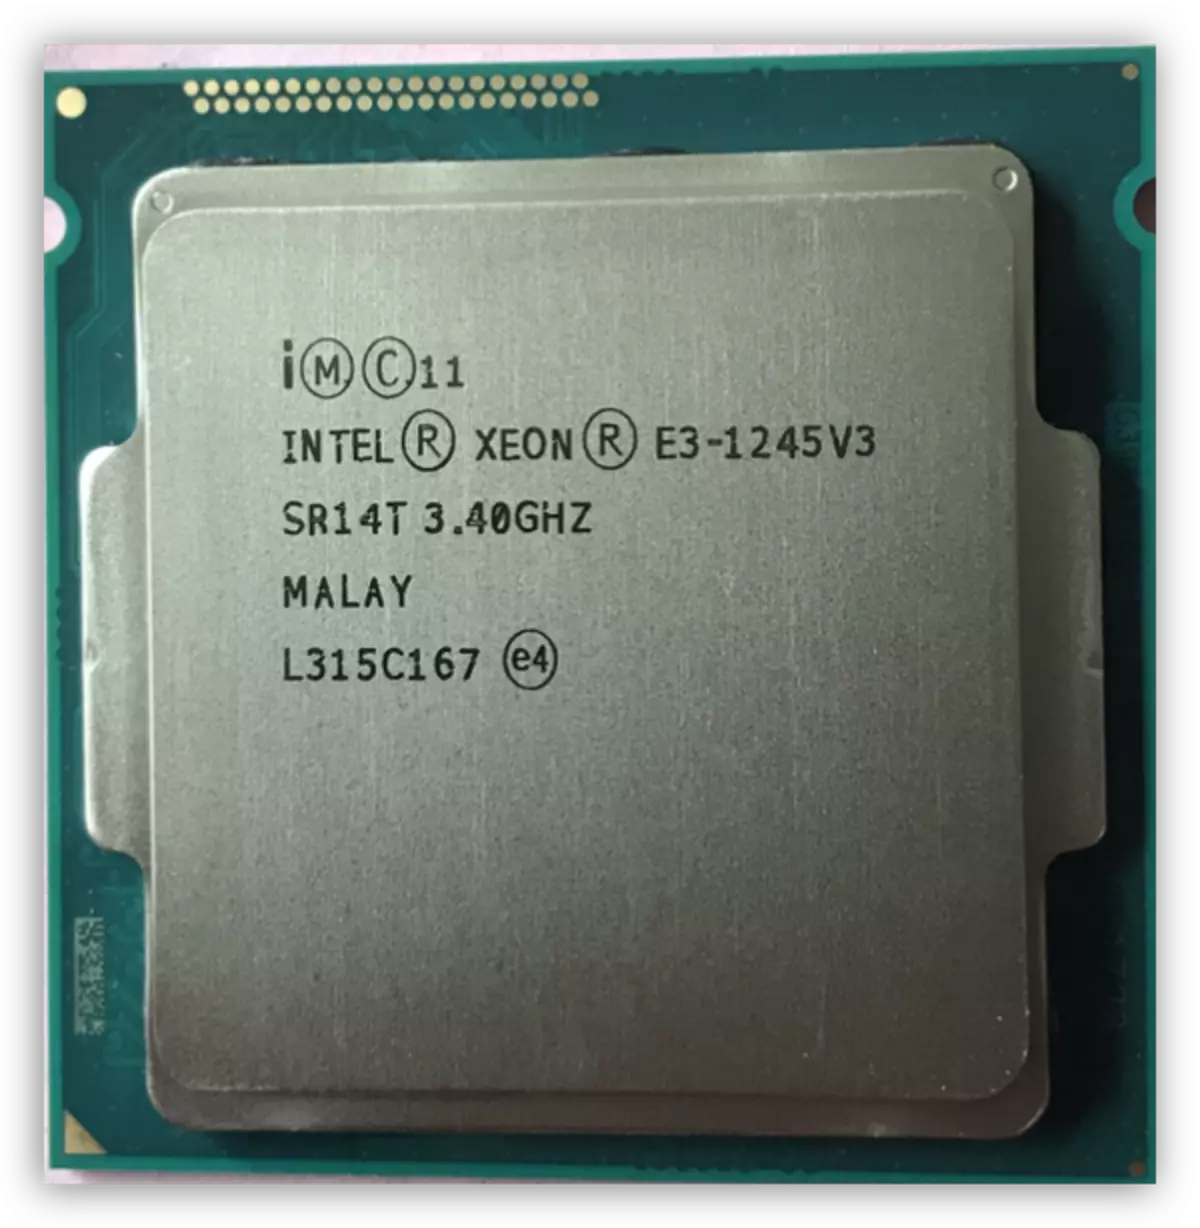 Xeon E3-1245 V3 Proceconsor on haswell aryhitect